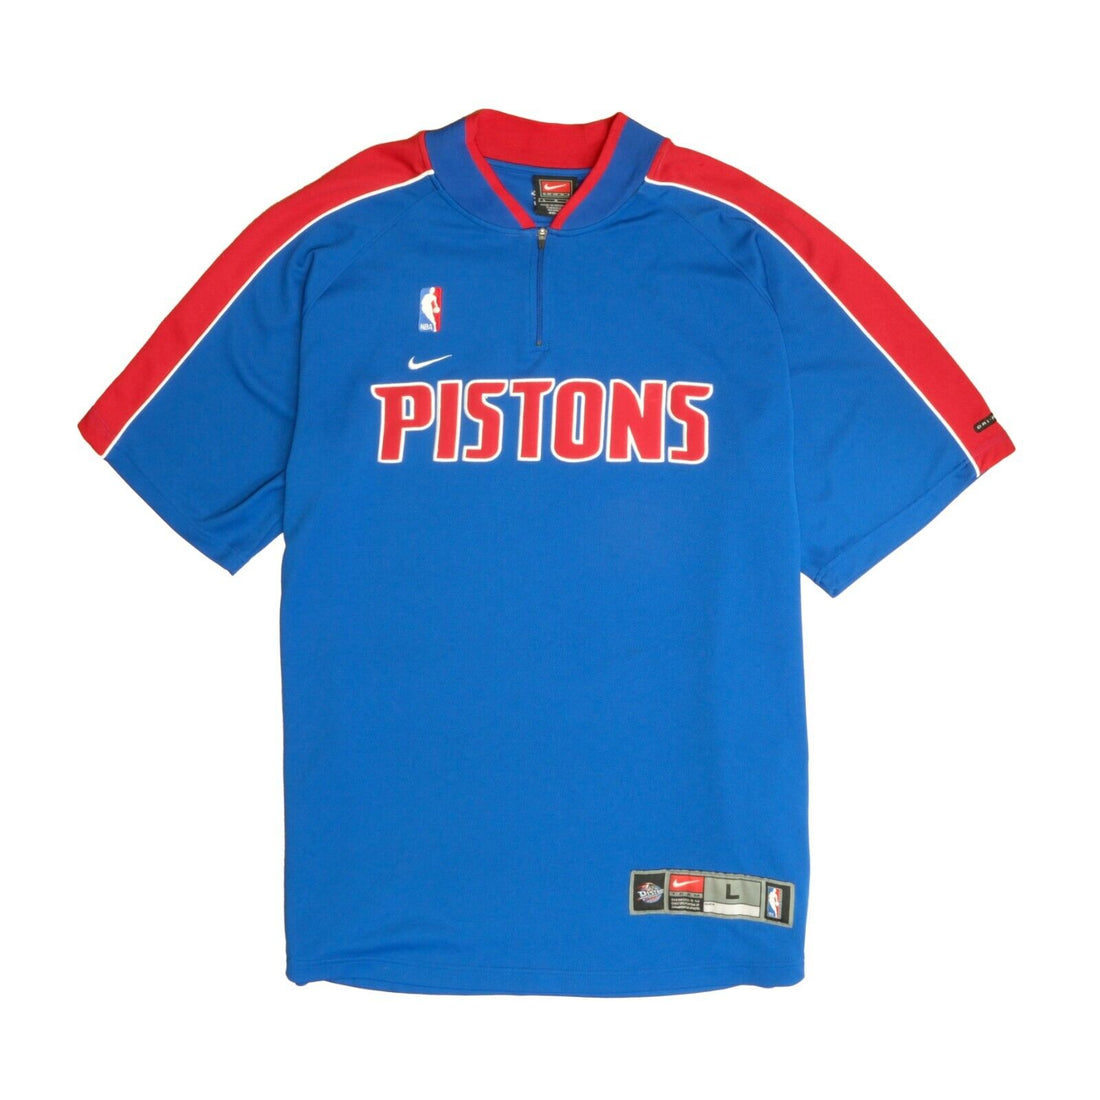 Vintage Detroit Pistons Nike Warm Up Shooting Jersey Size Large Blue NBA